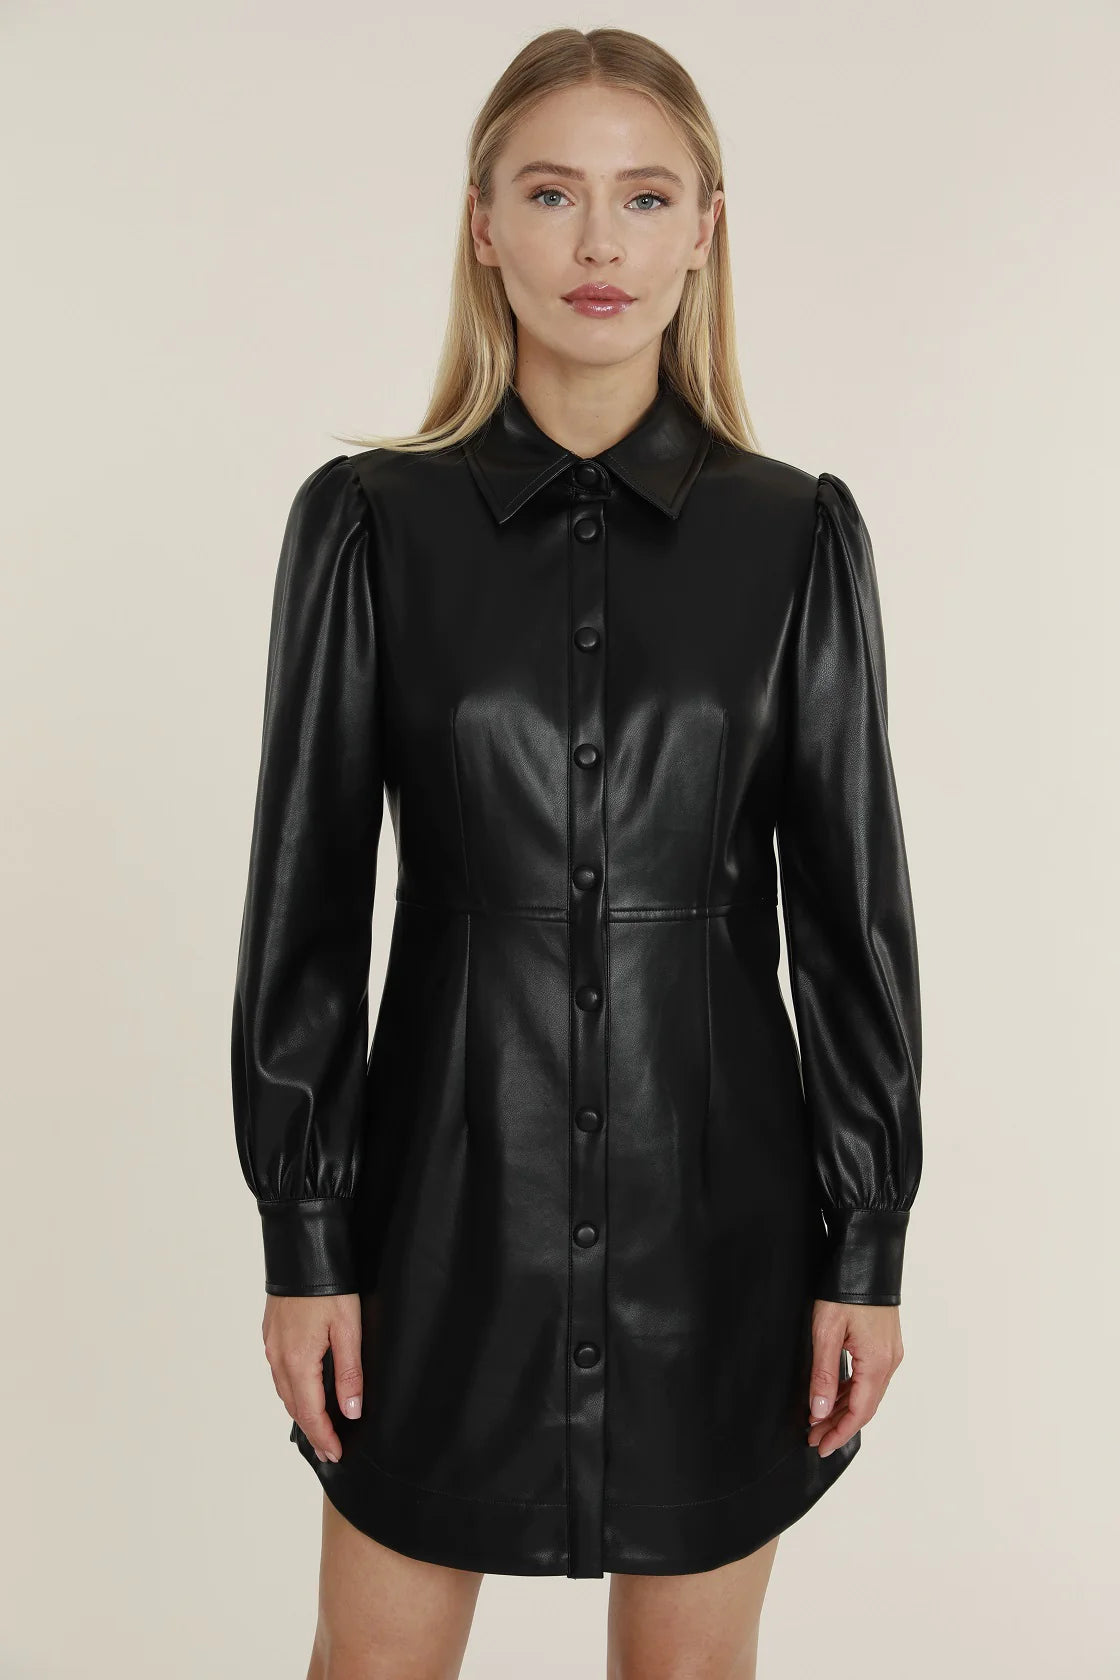 Vegan Leather Black Dress